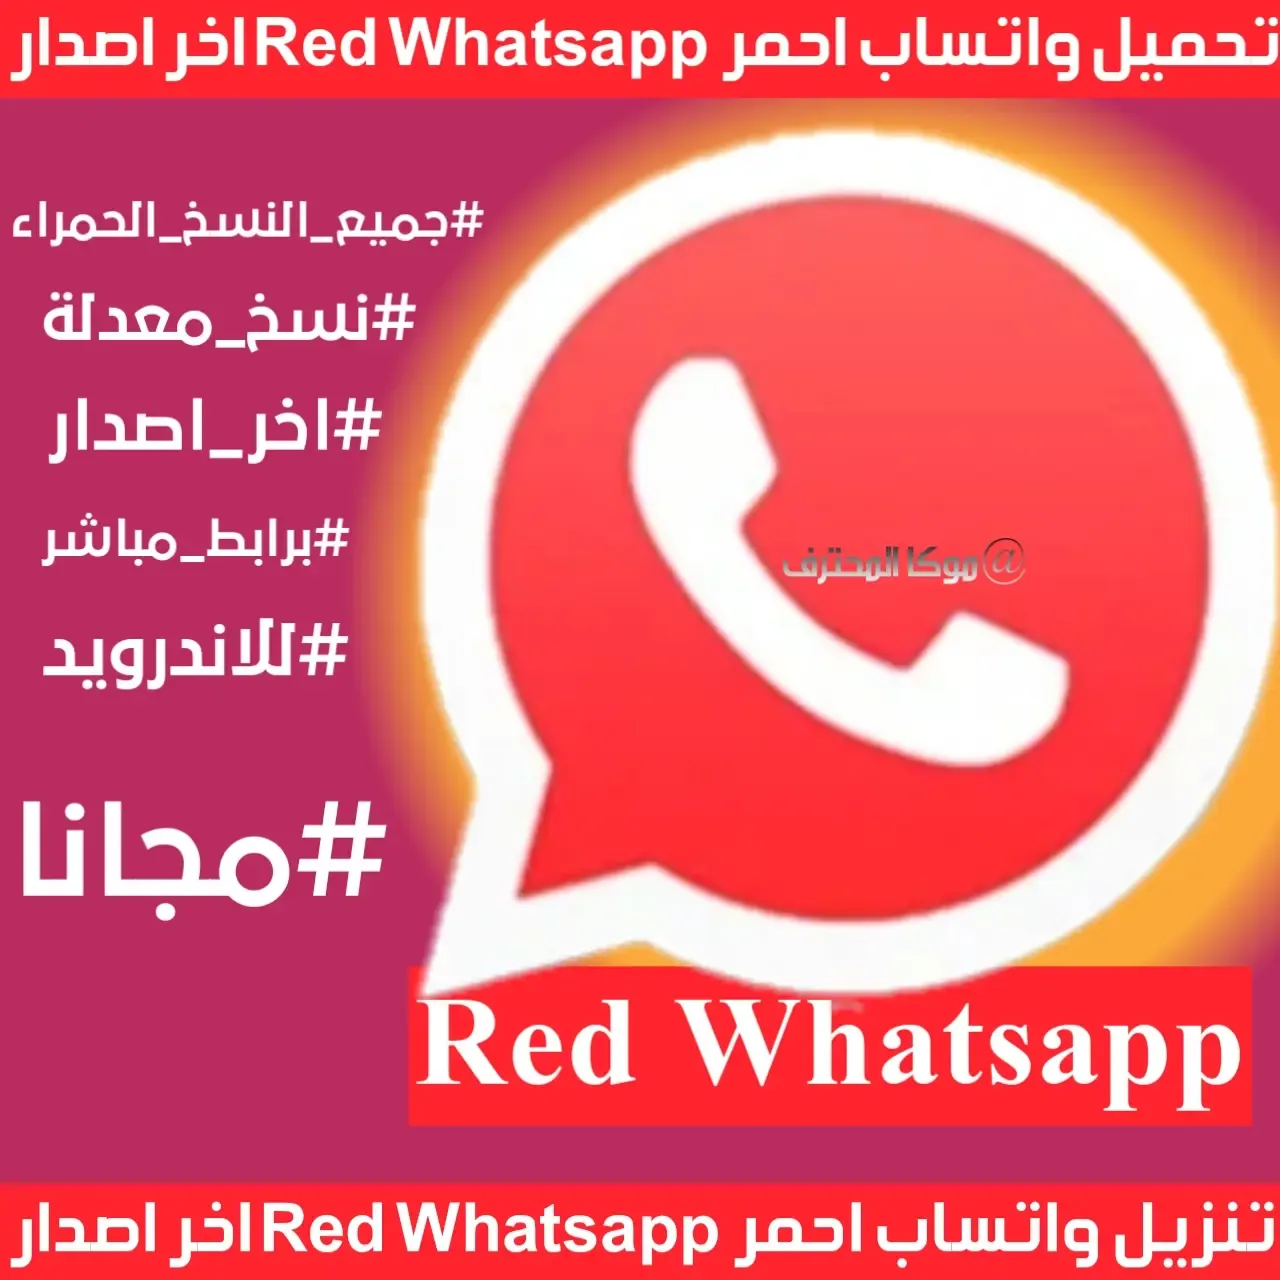 واتساب احمر تنزيل الواتساب الاحمر 2021 Red Whatsapp تحميل واتس اب احمر